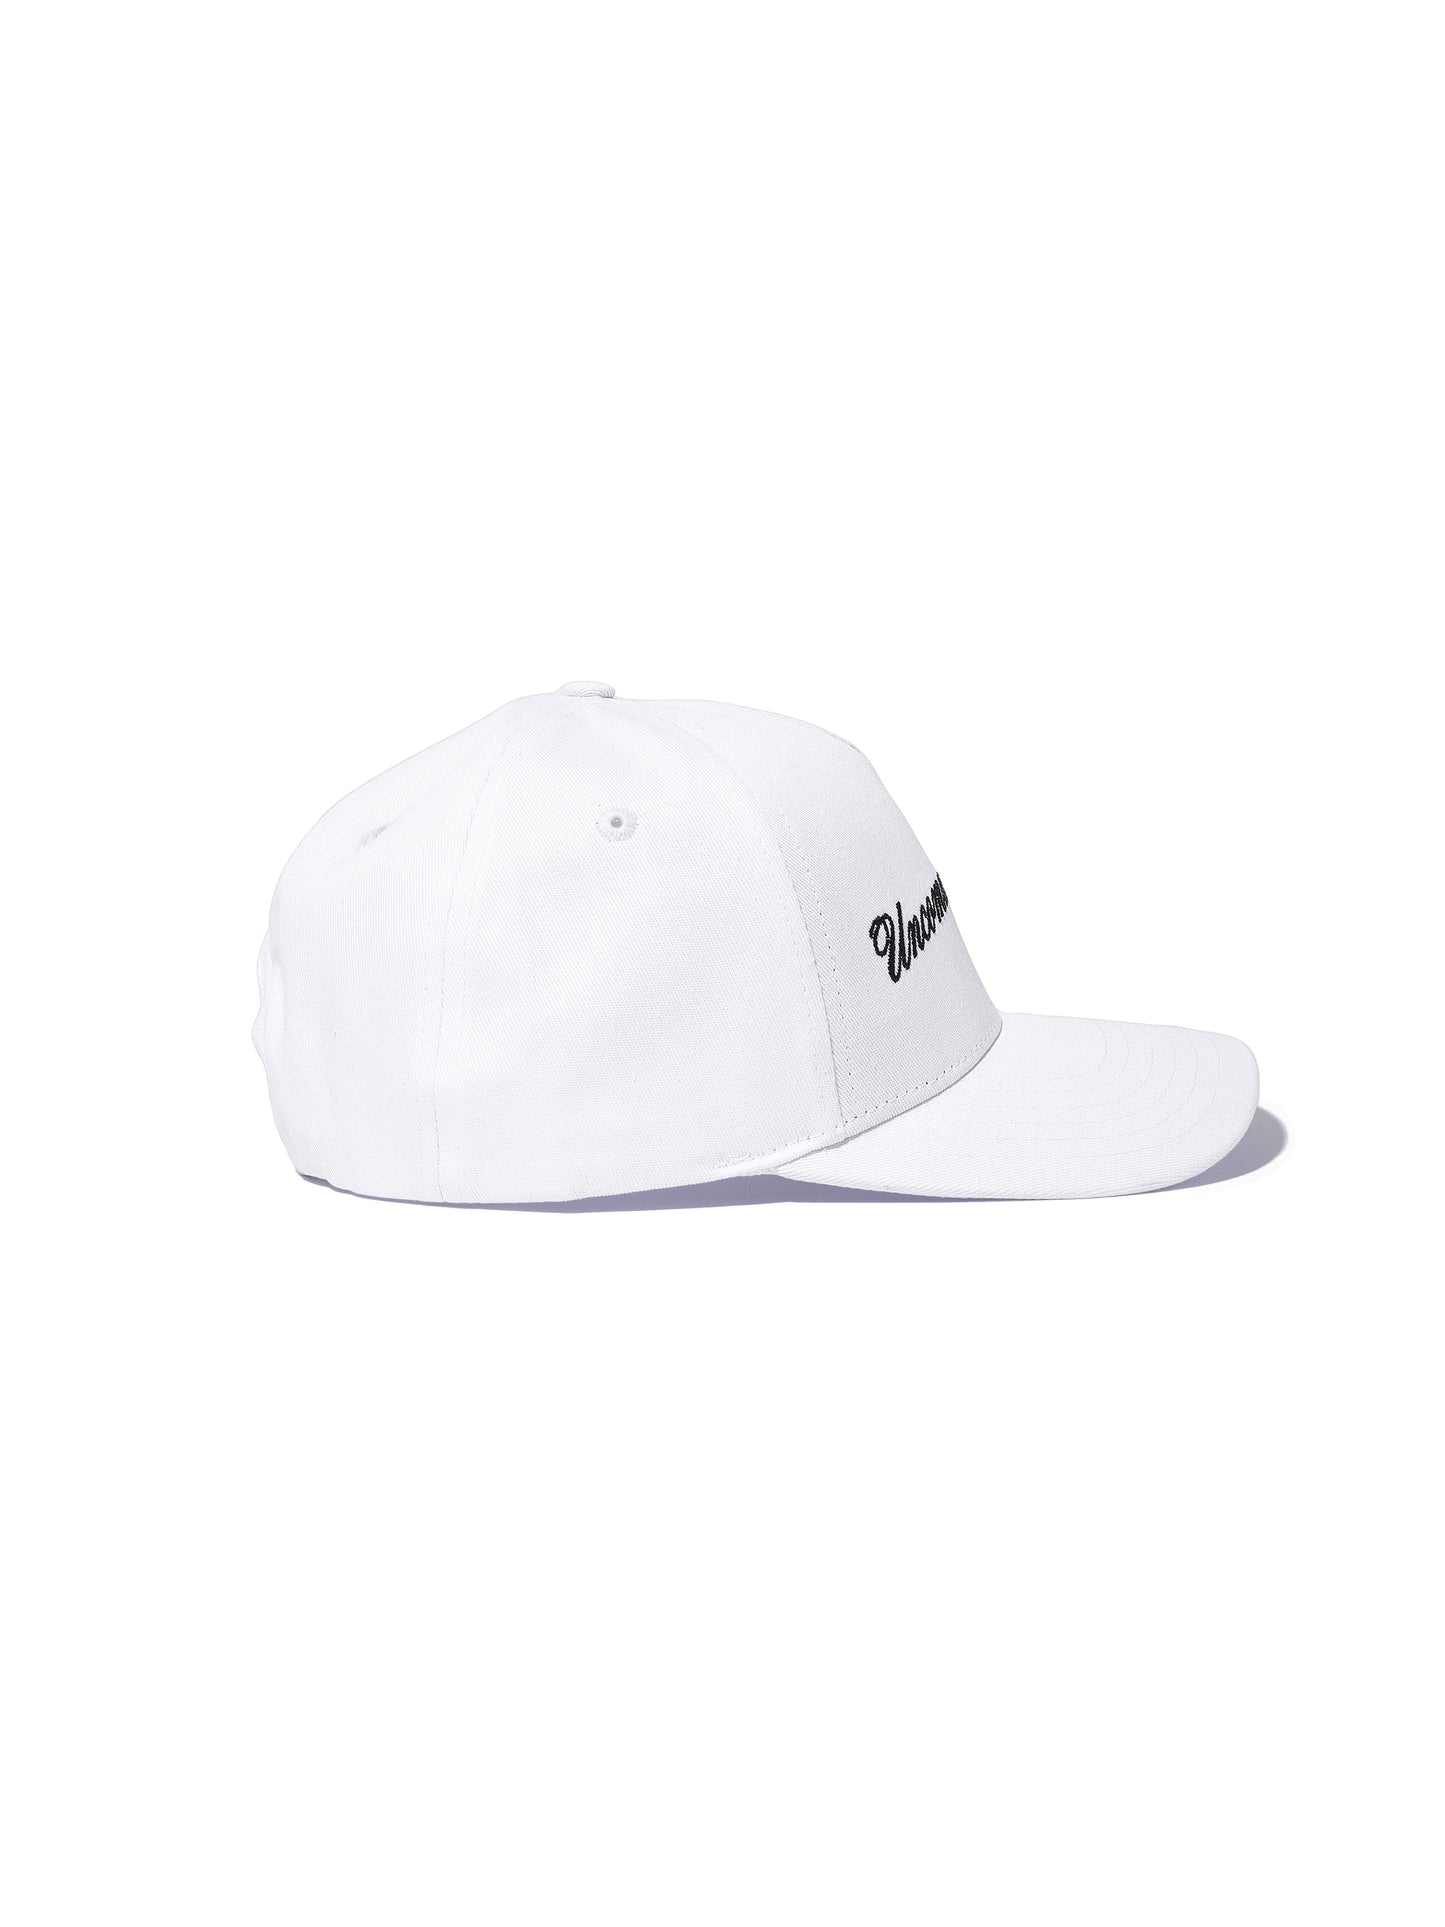 UJ Girl Trucker Hat | White | Product Detail Image | Uncommon Lifestyle